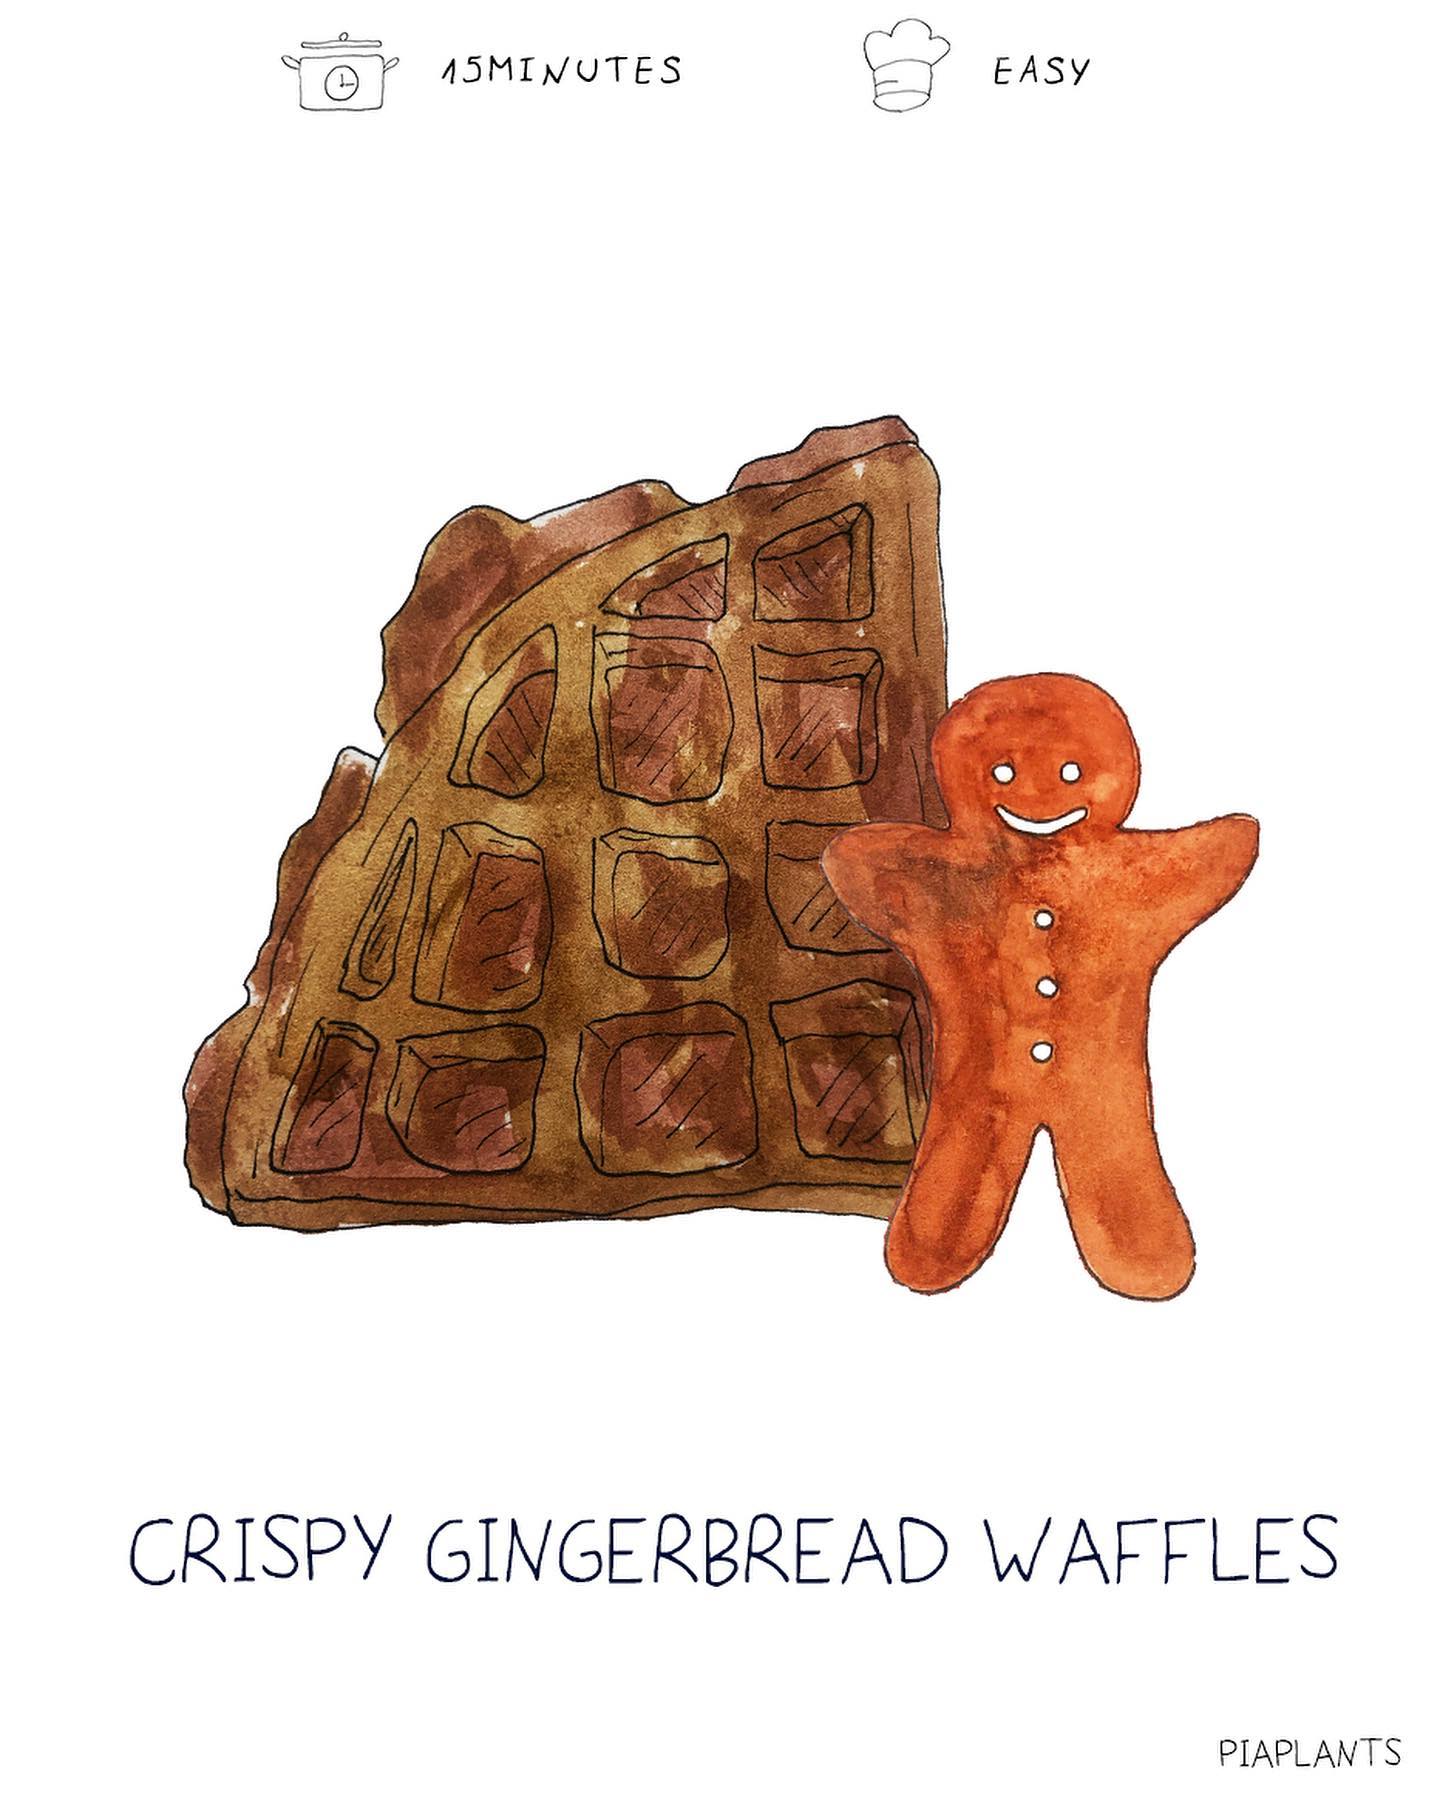 Crispy Gingerbread Waffles for a Festive Treat